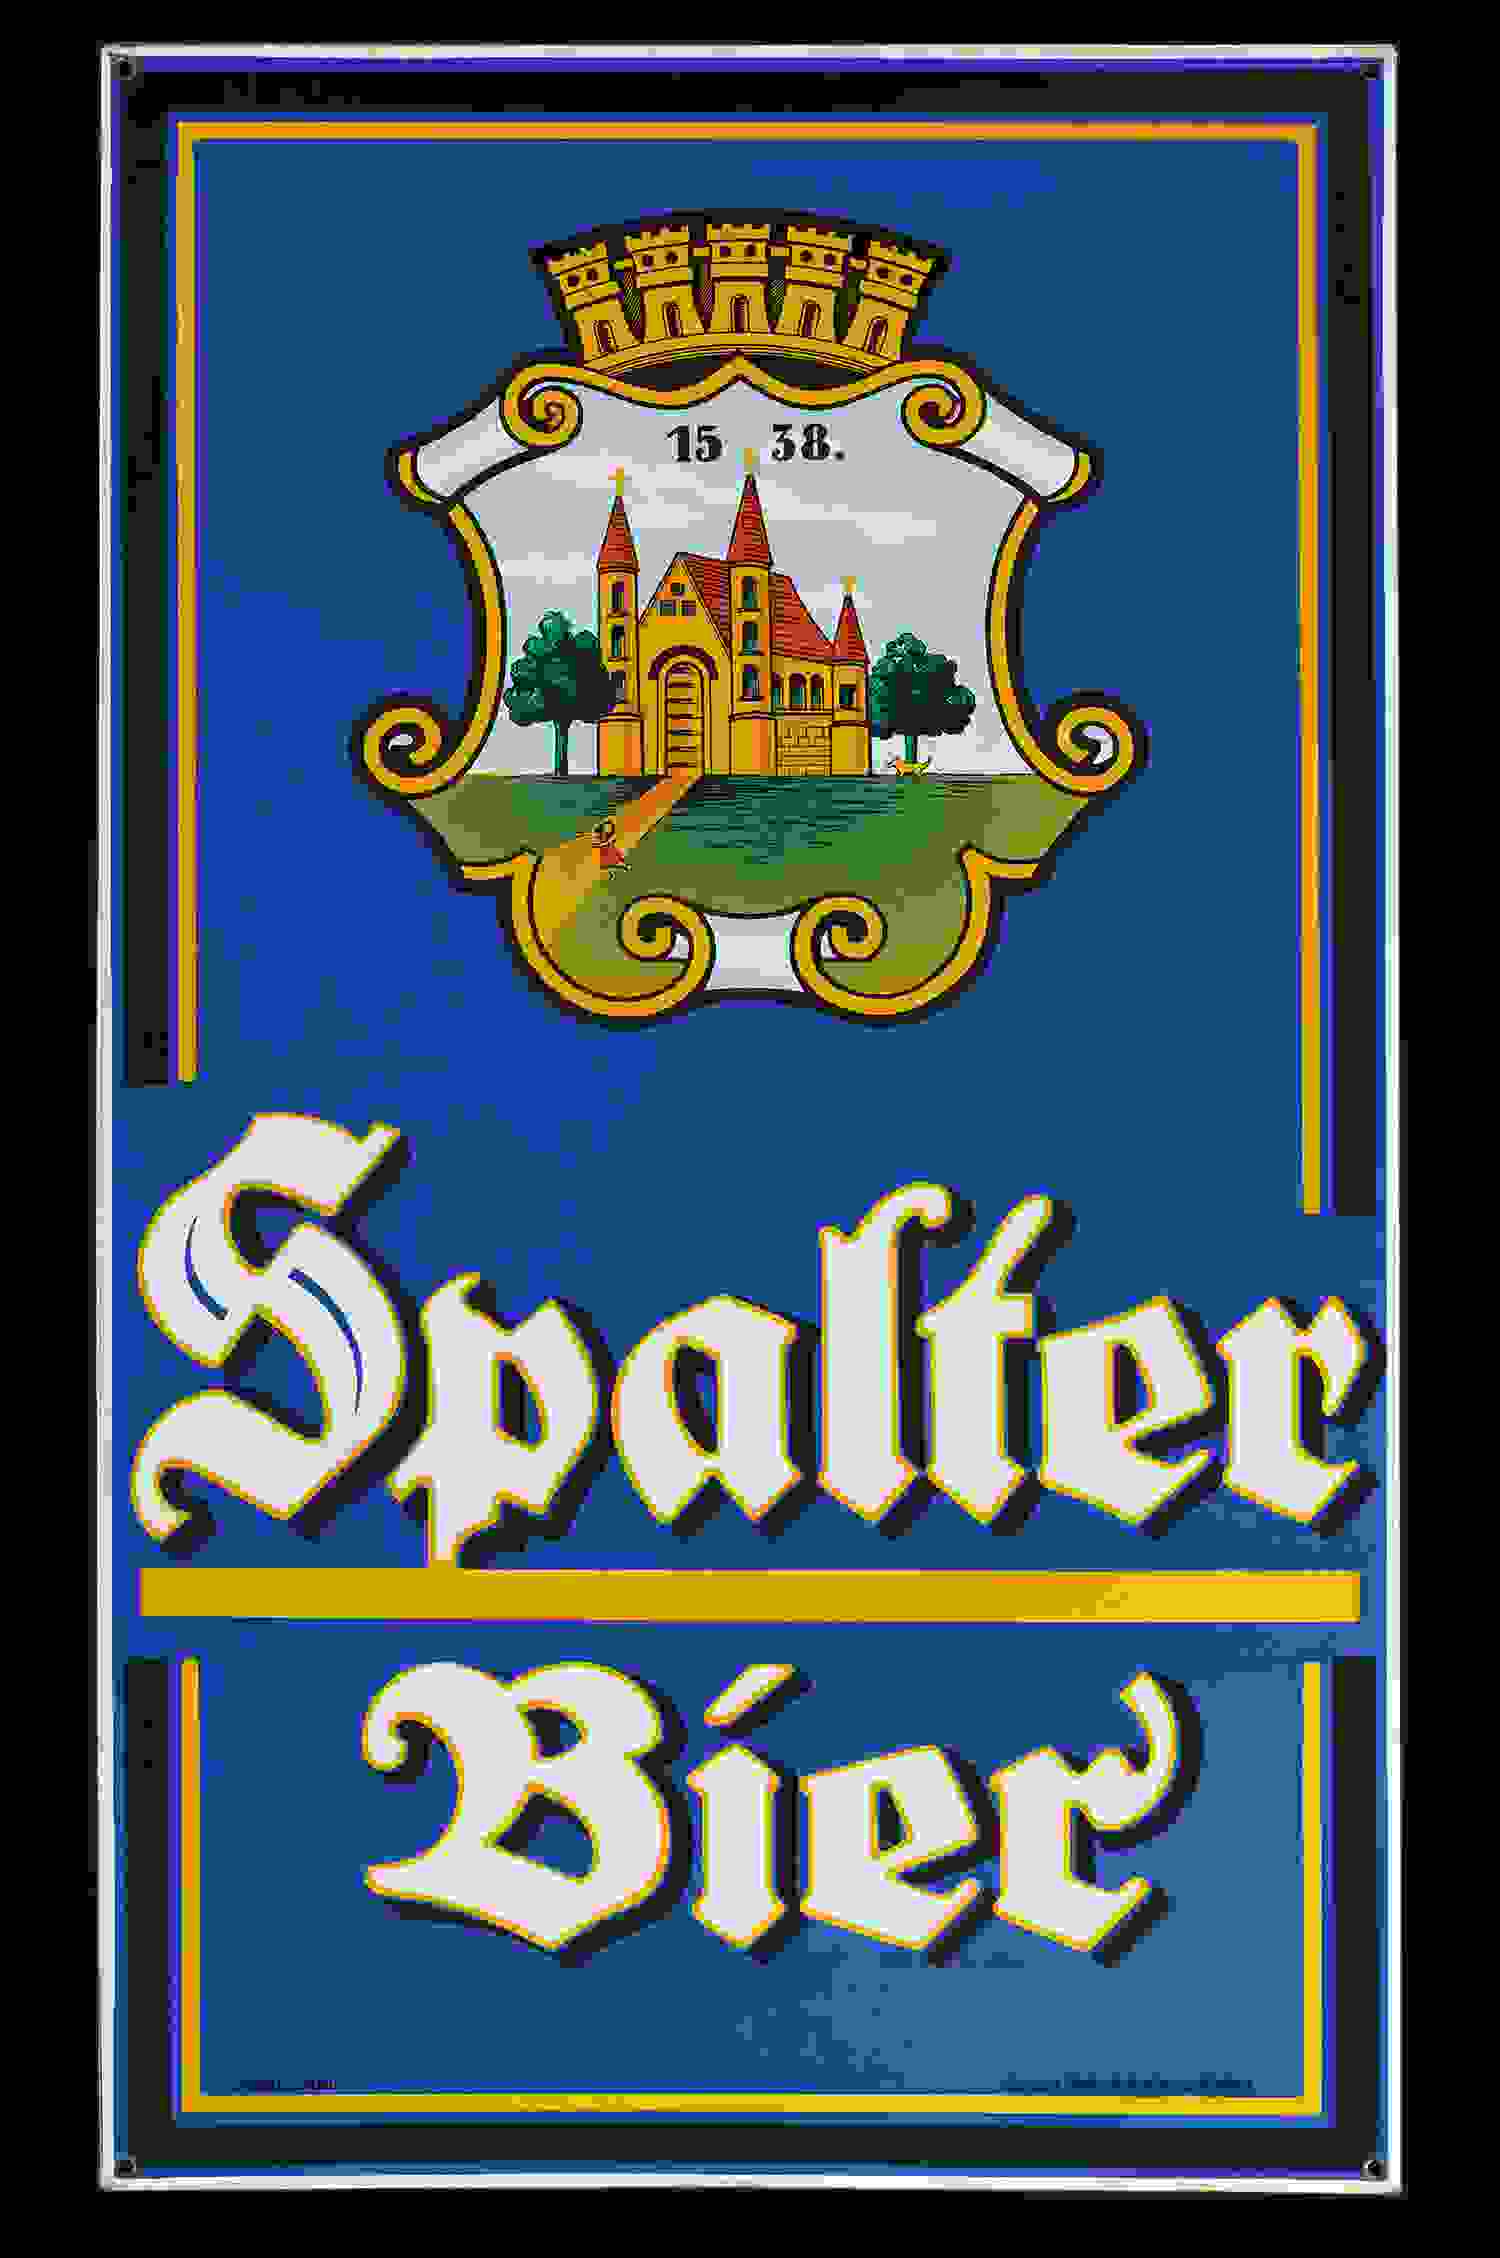 Spalter Bier 